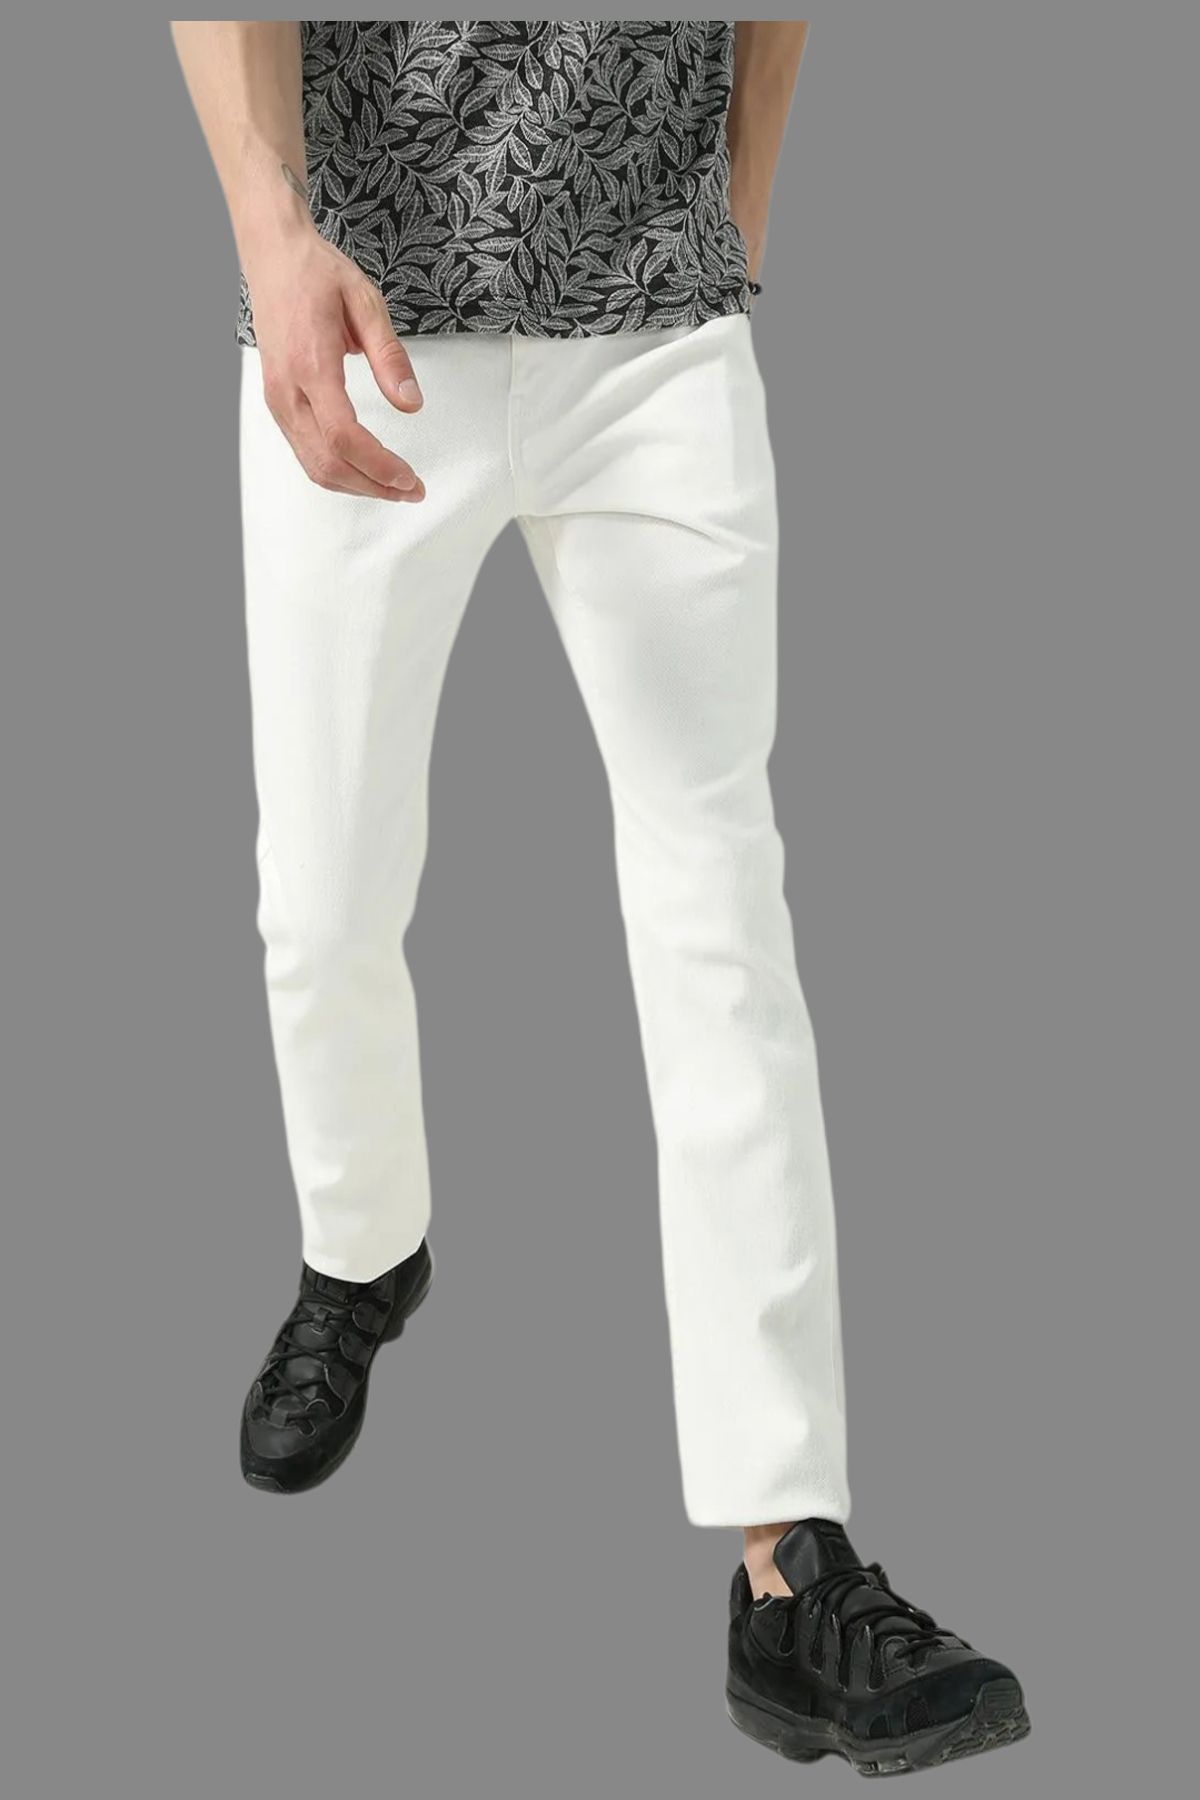     			x20 - White Denim Slim Fit Men's Jeans ( Pack of 1 )